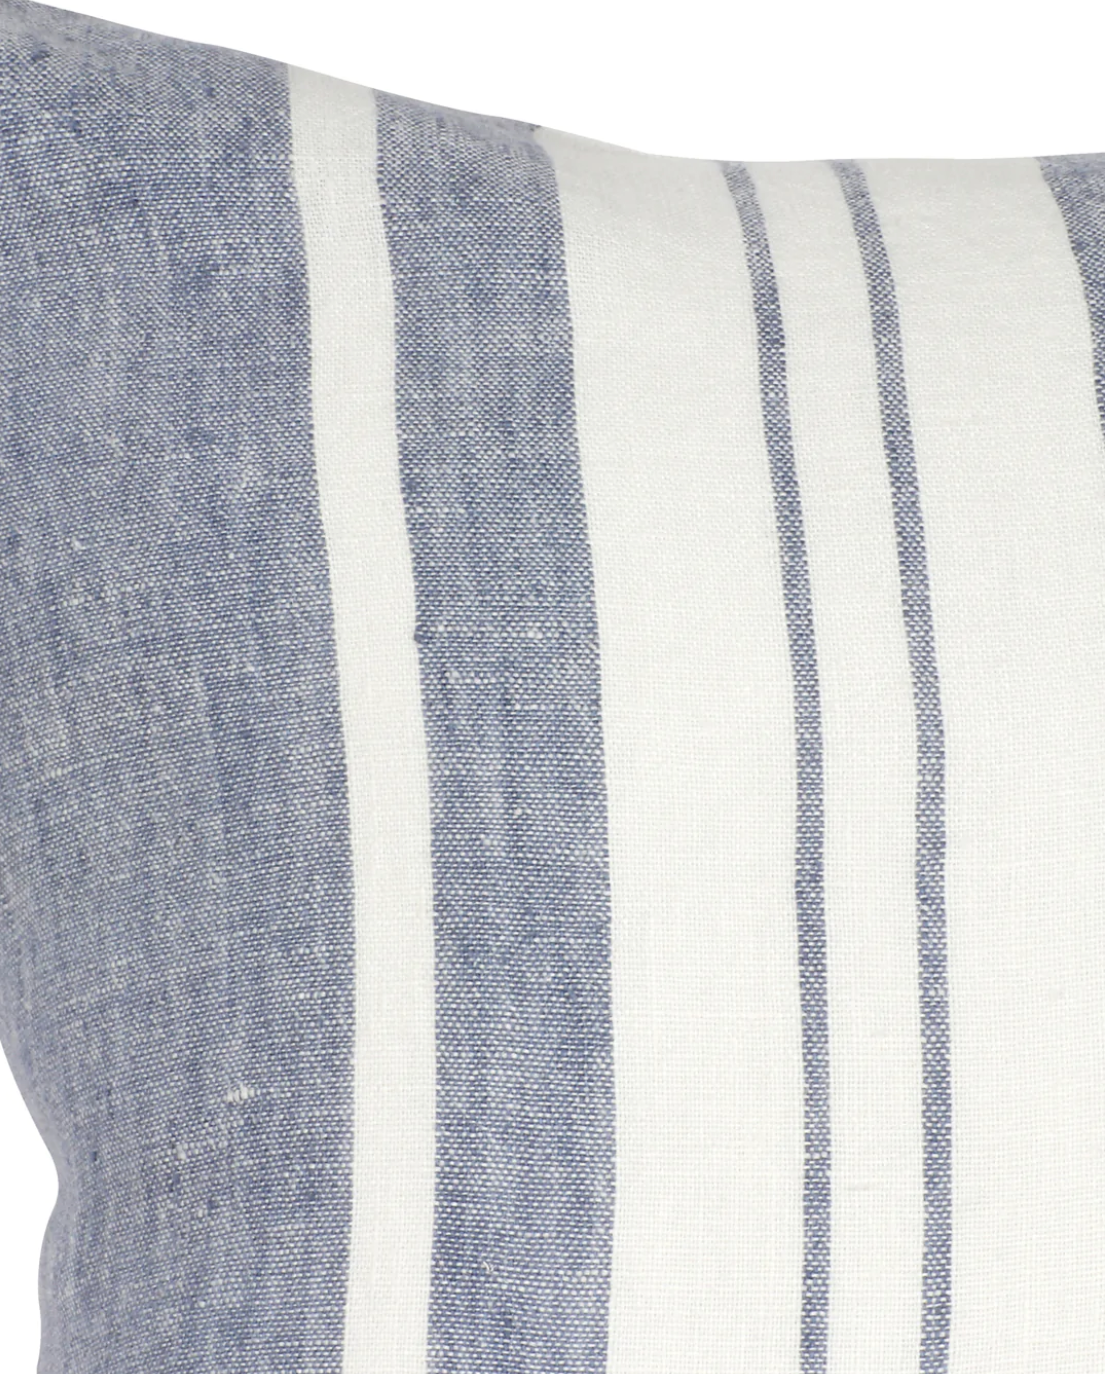 Chambray Blue Bold Stripe Linen Pillows